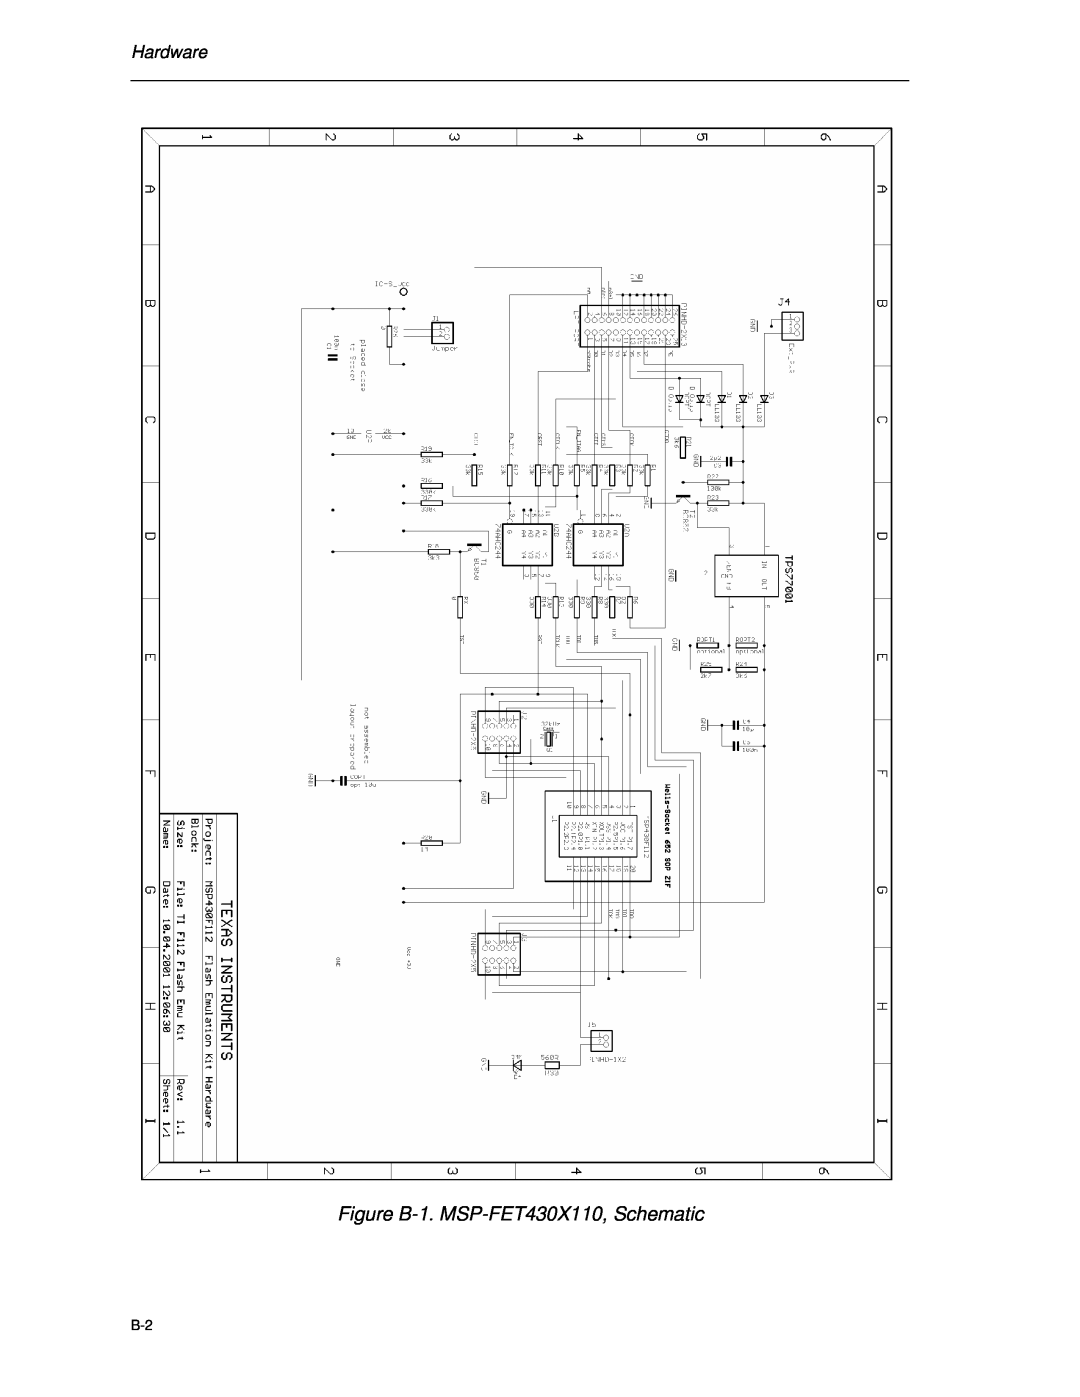 Texas Instruments manual Figure B-1. MSP-FET430X110, Schematic, Hardware 